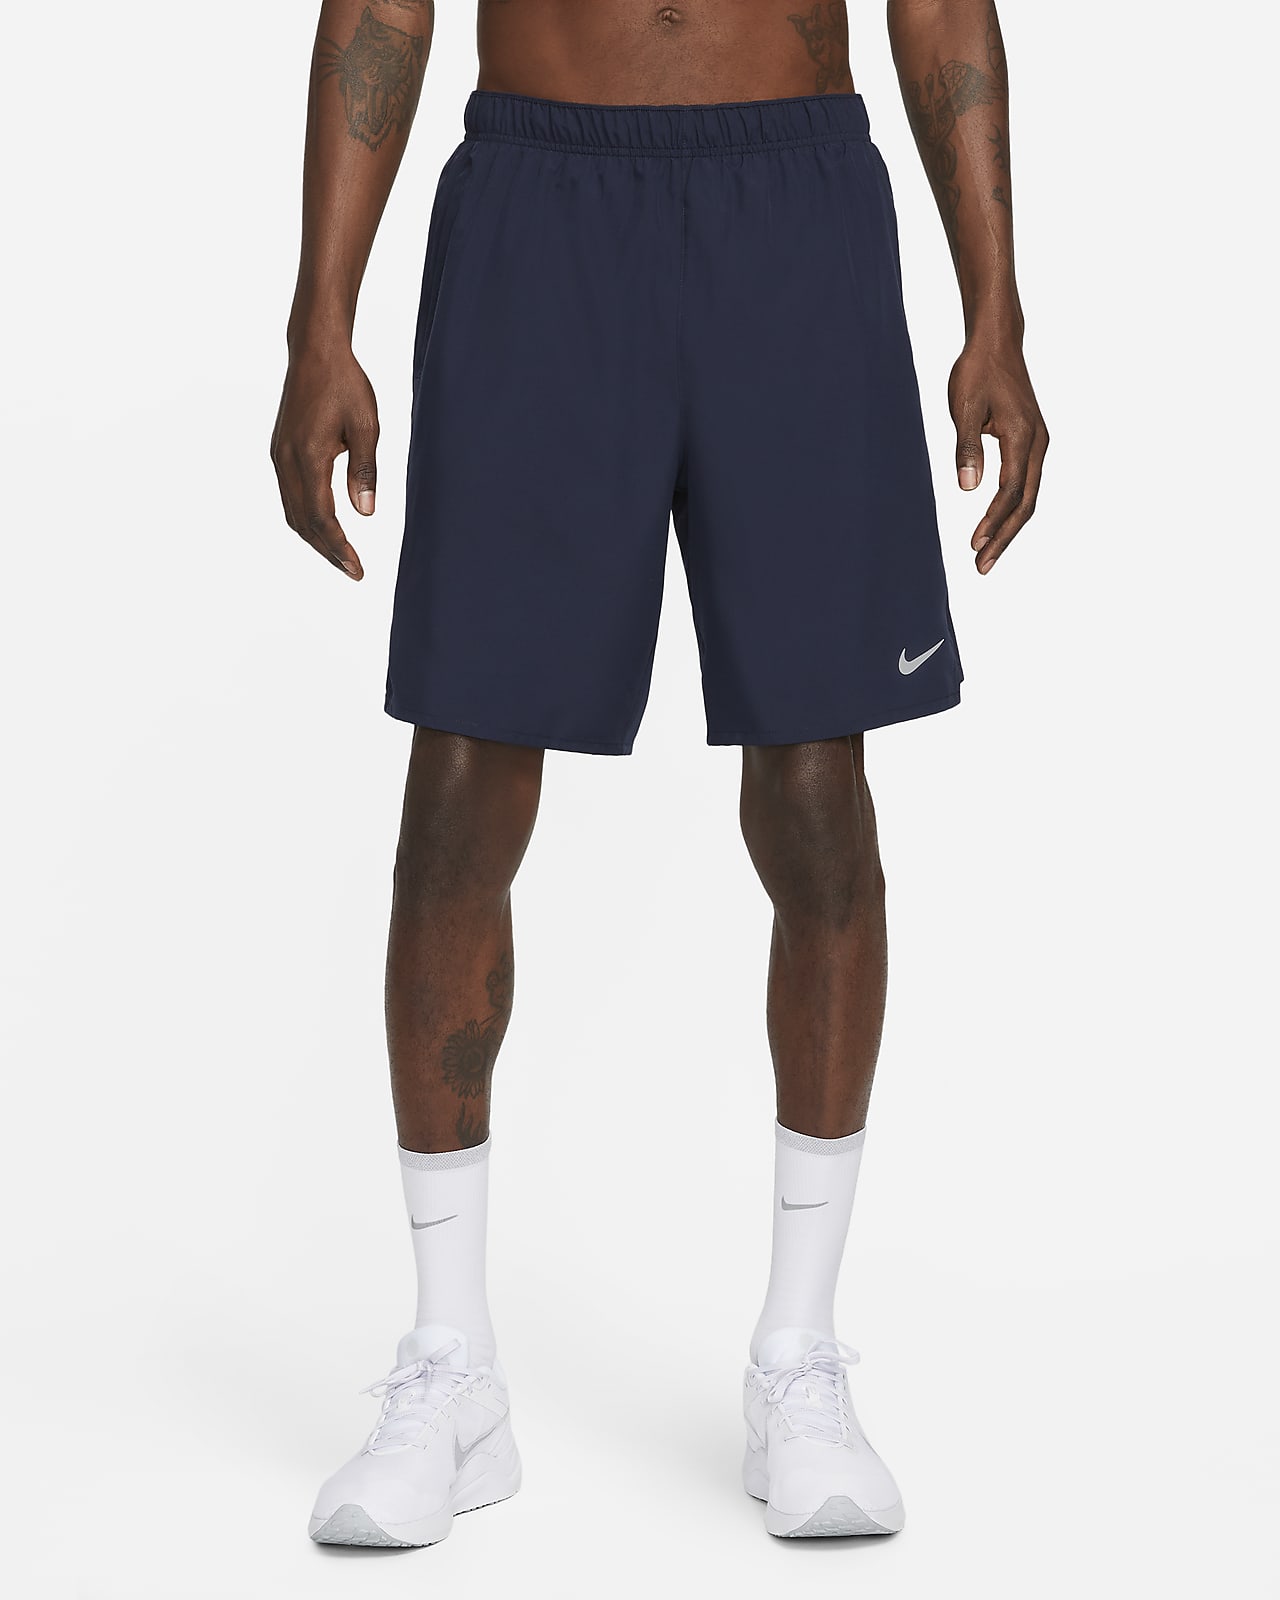 Nike Challenger Pantalons curts Dri-FIT versàtils sense folre de 23 cm - Home